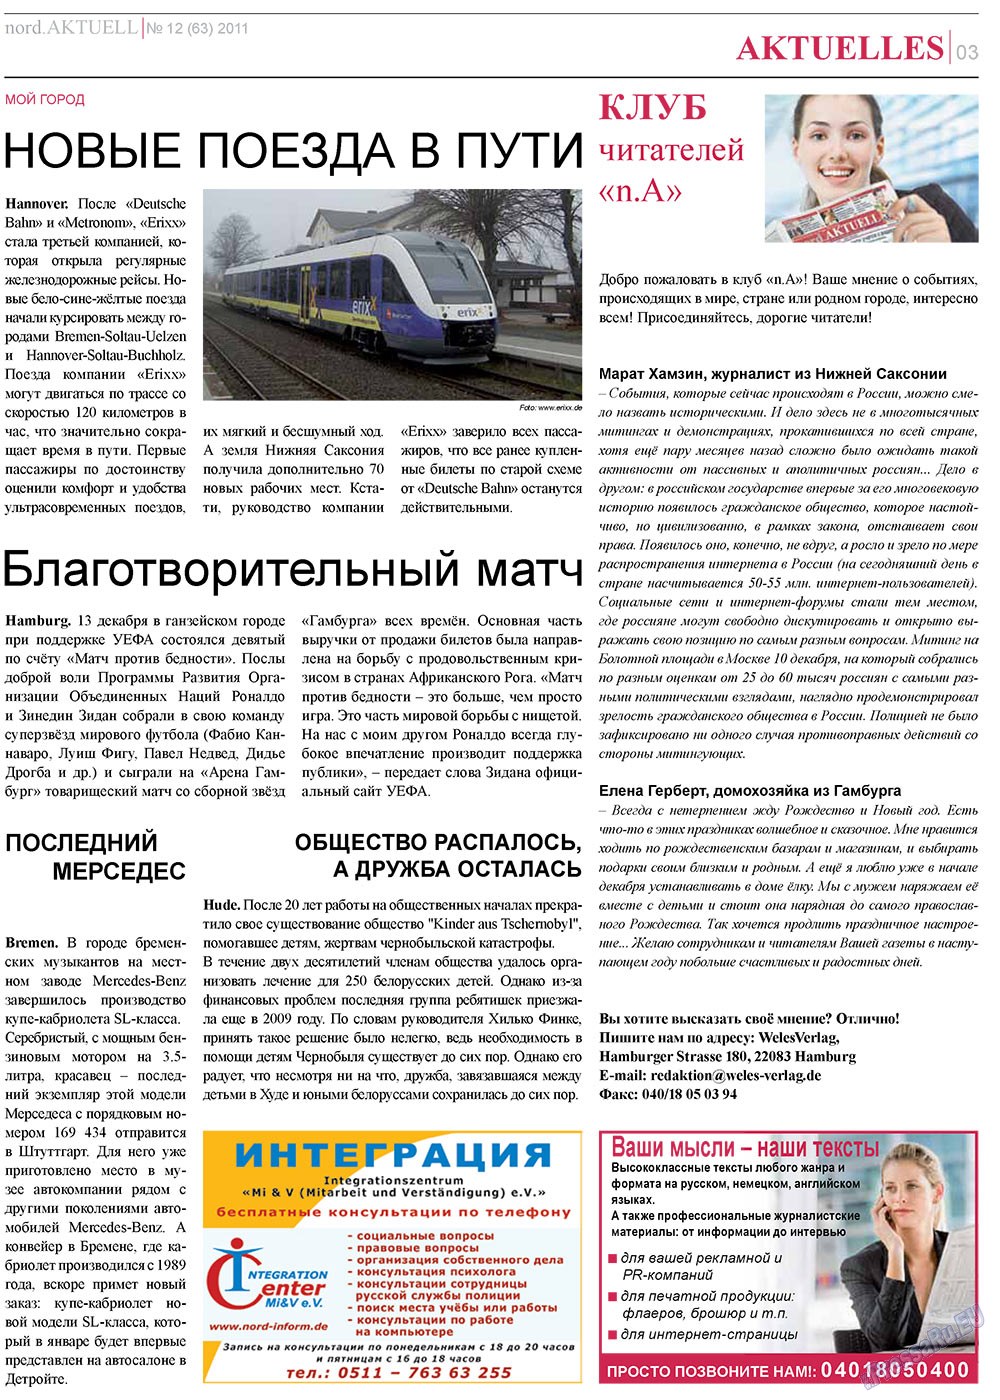 nord.Aktuell, газета. 2011 №12 стр.3